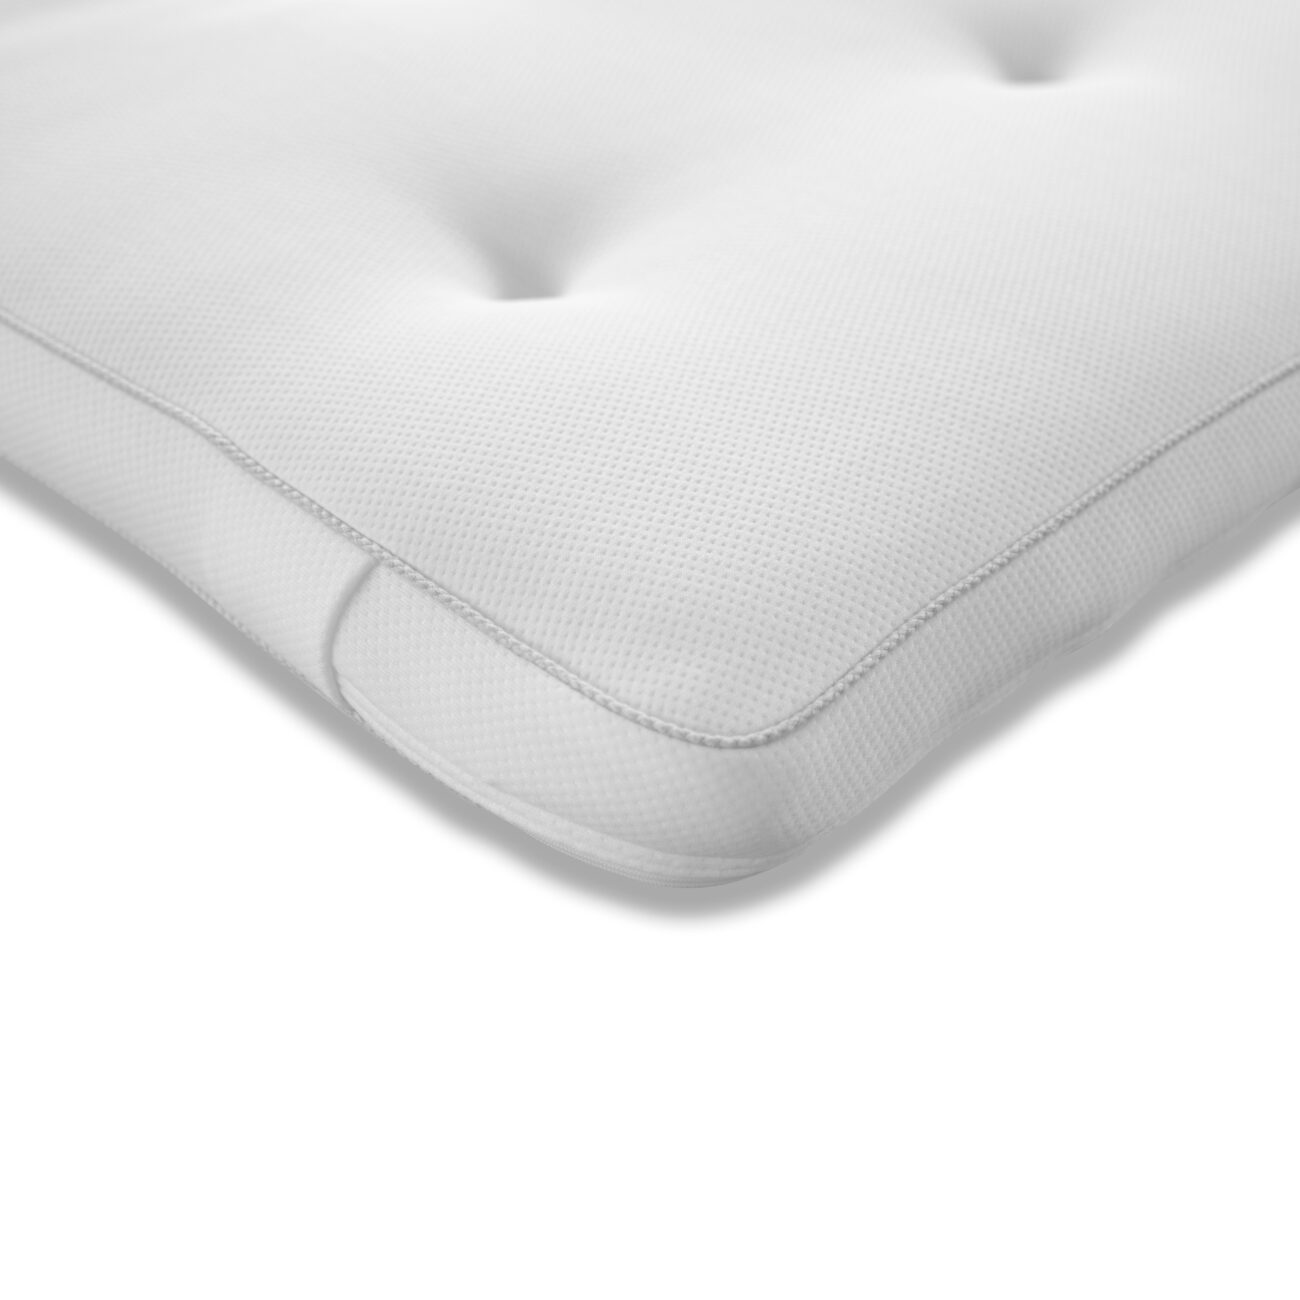 Bed mattress TrensExtra 9 cm